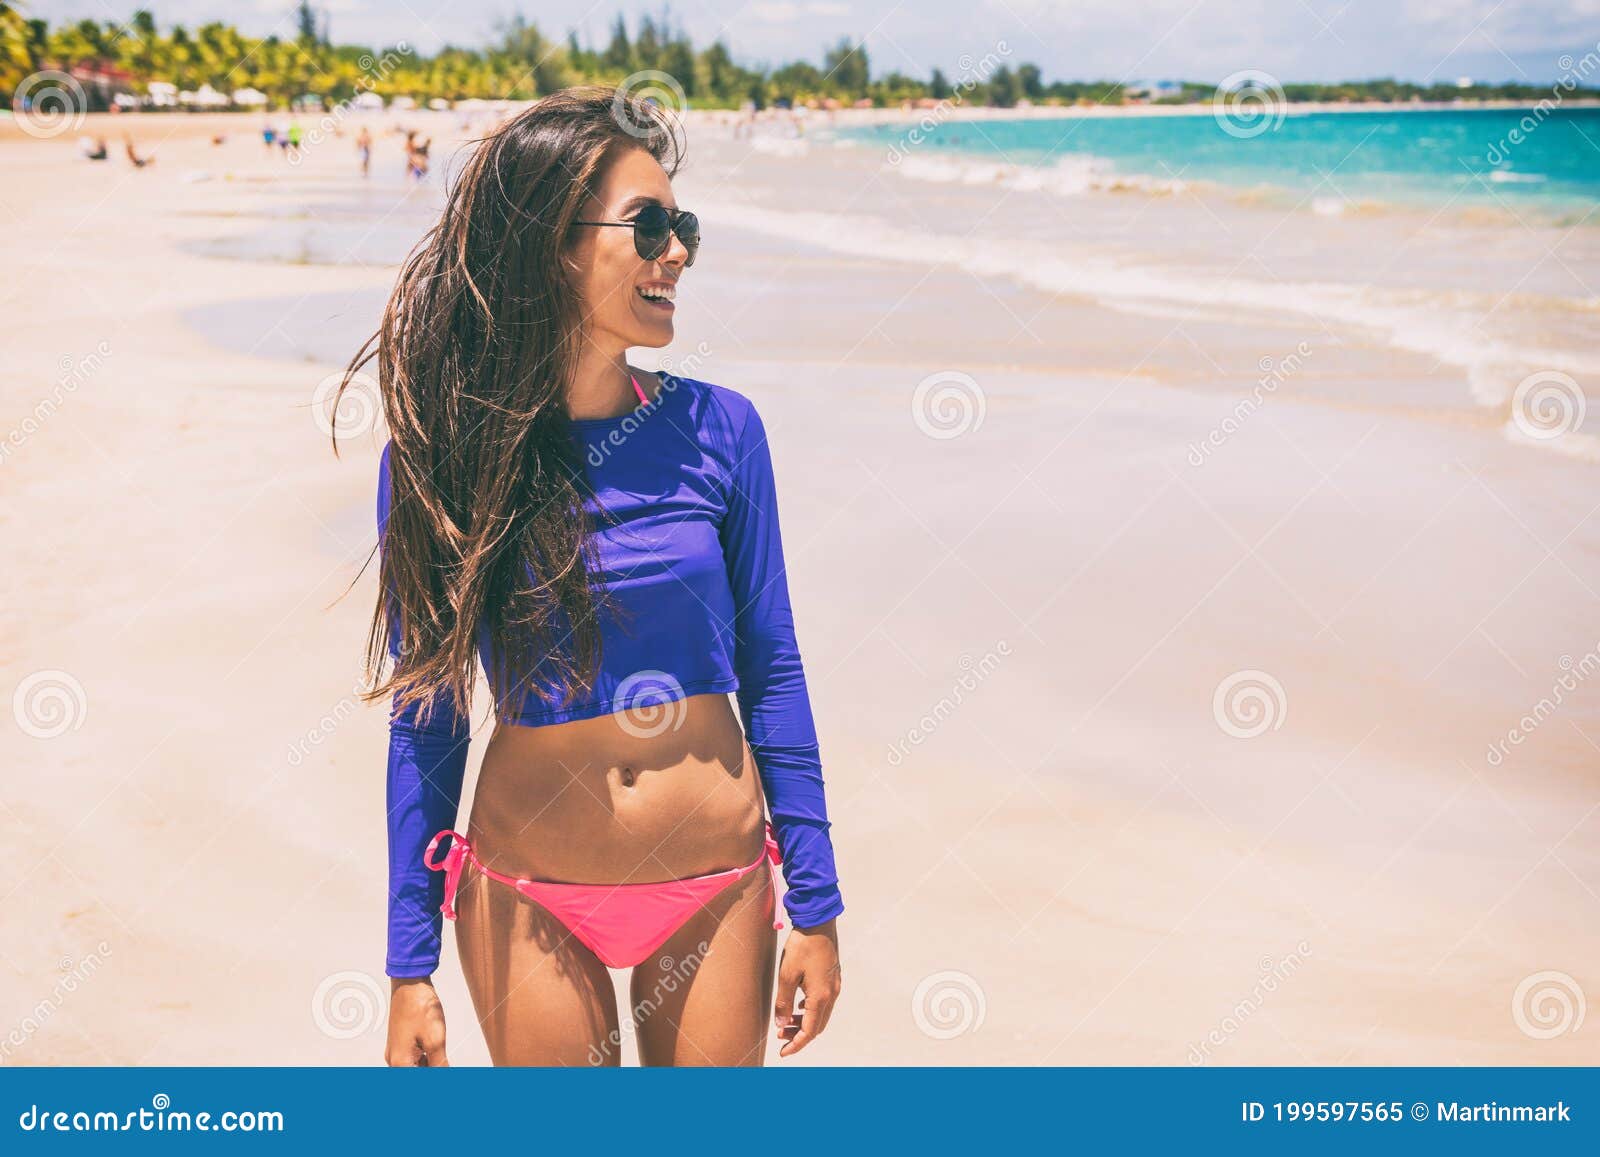 Beach Rashguard Bikini Woman Wearing Swim Shirt Rash Guard for Sun  Protection Against Solar Uv Rays Stock Image - Image of happy, guard:  199597565